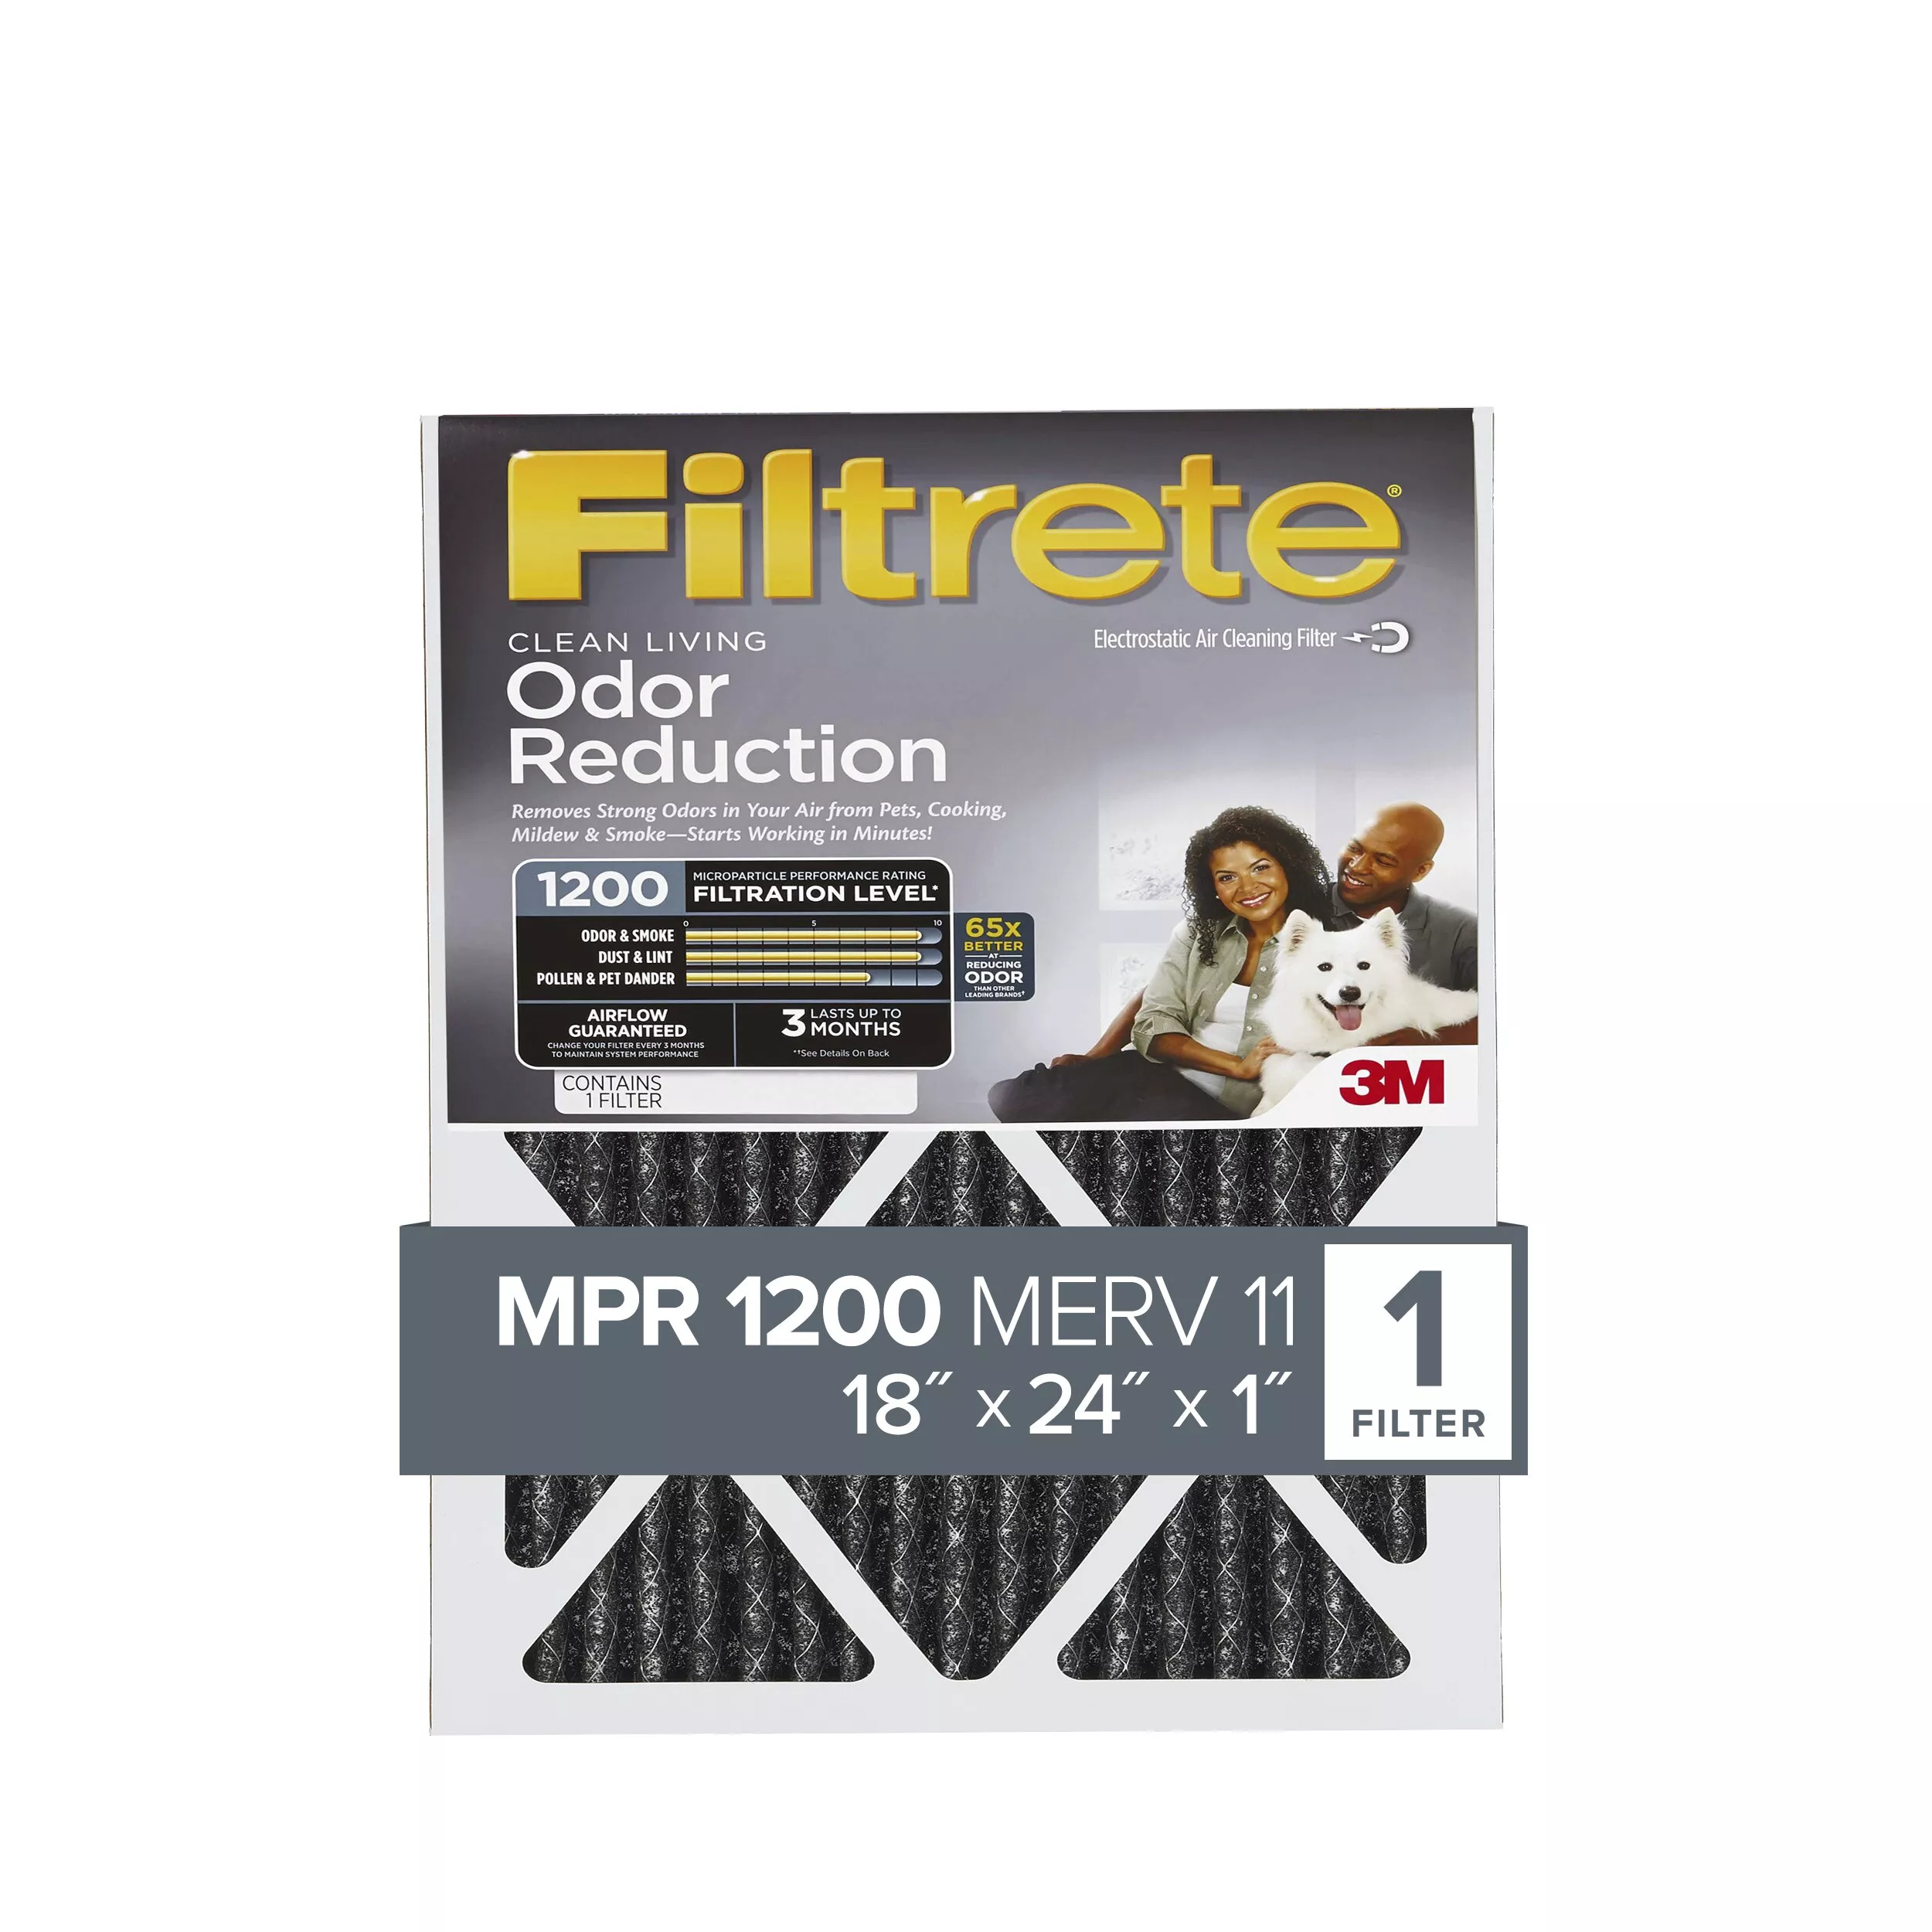 Filtrete™ Home Odor Reduction Filter HOME21-4, 18 in x 24 in x 1 in
(45,7 cm x 60,9 cm x 2,5 cm)